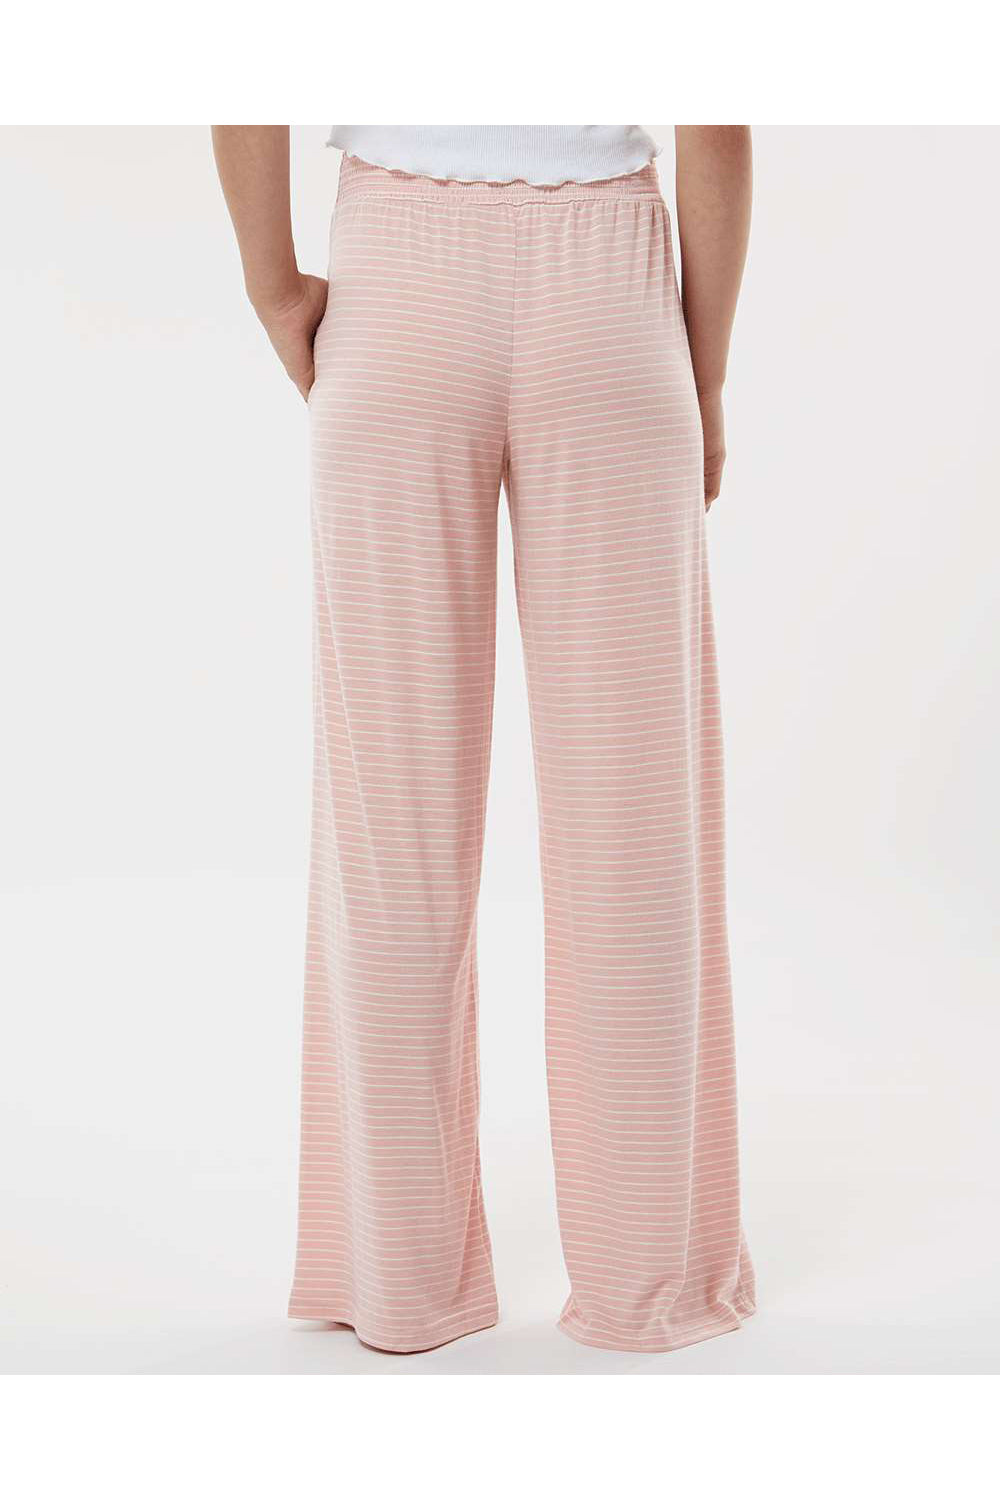 Boxercraft BW6615 Womens Evelyn Lounge Pants Blush Pink/White Model Back